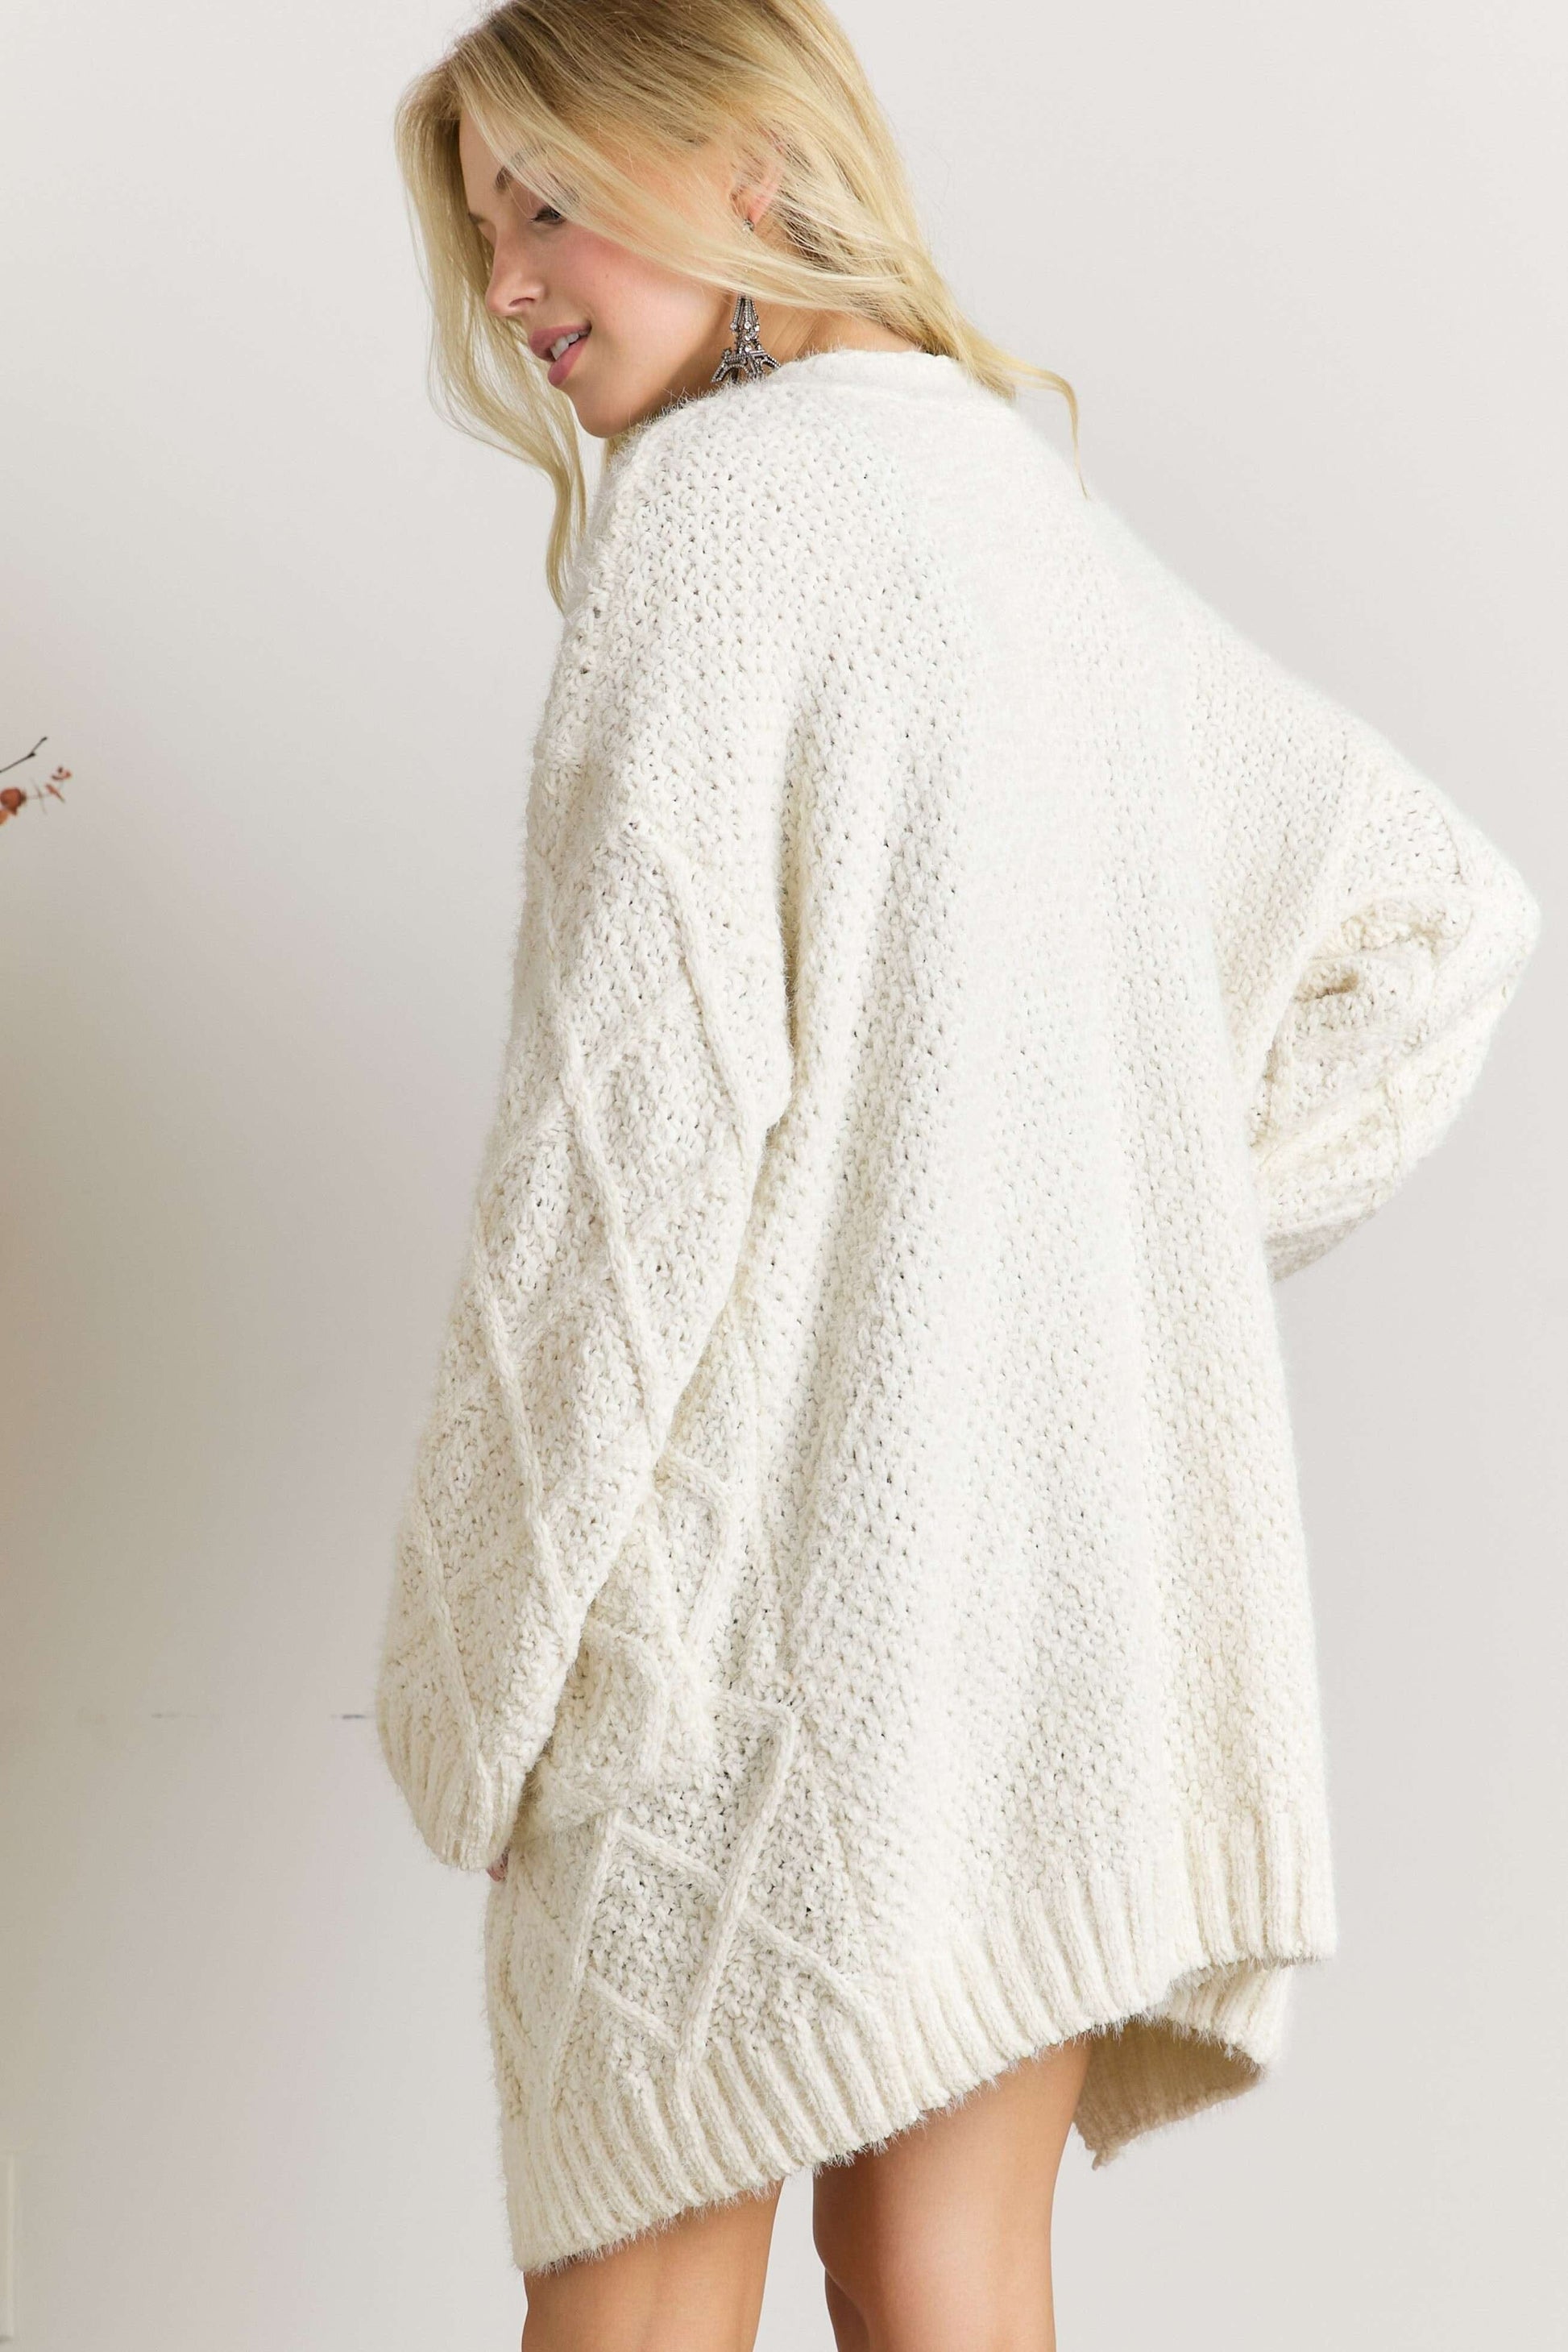 Adora Irresistible Ivory Chunky Knit Cardigan SALE